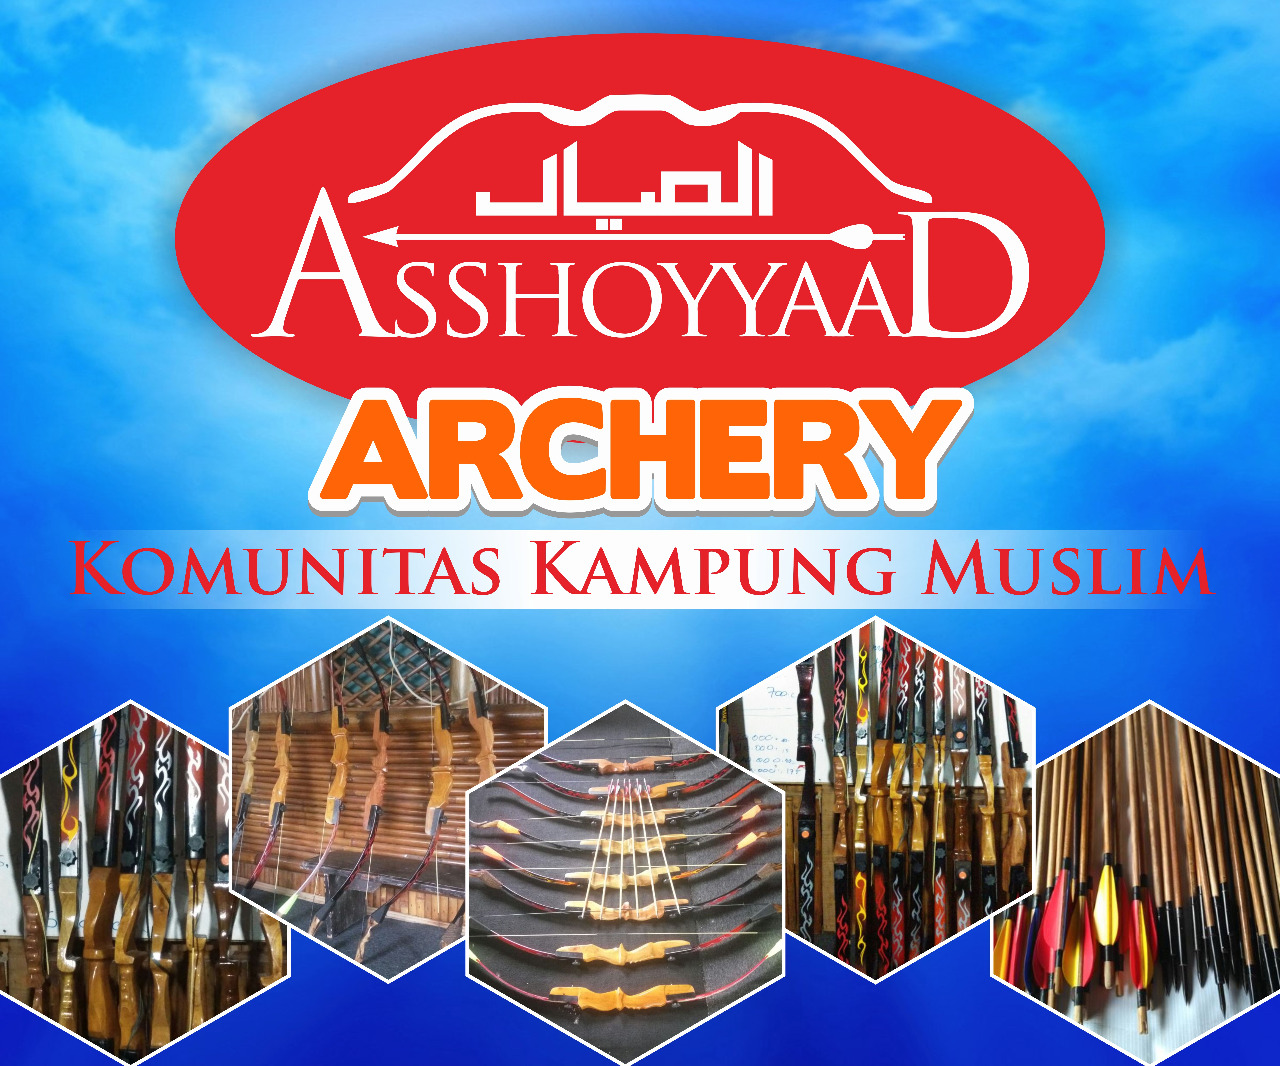 asshoyyaad archery